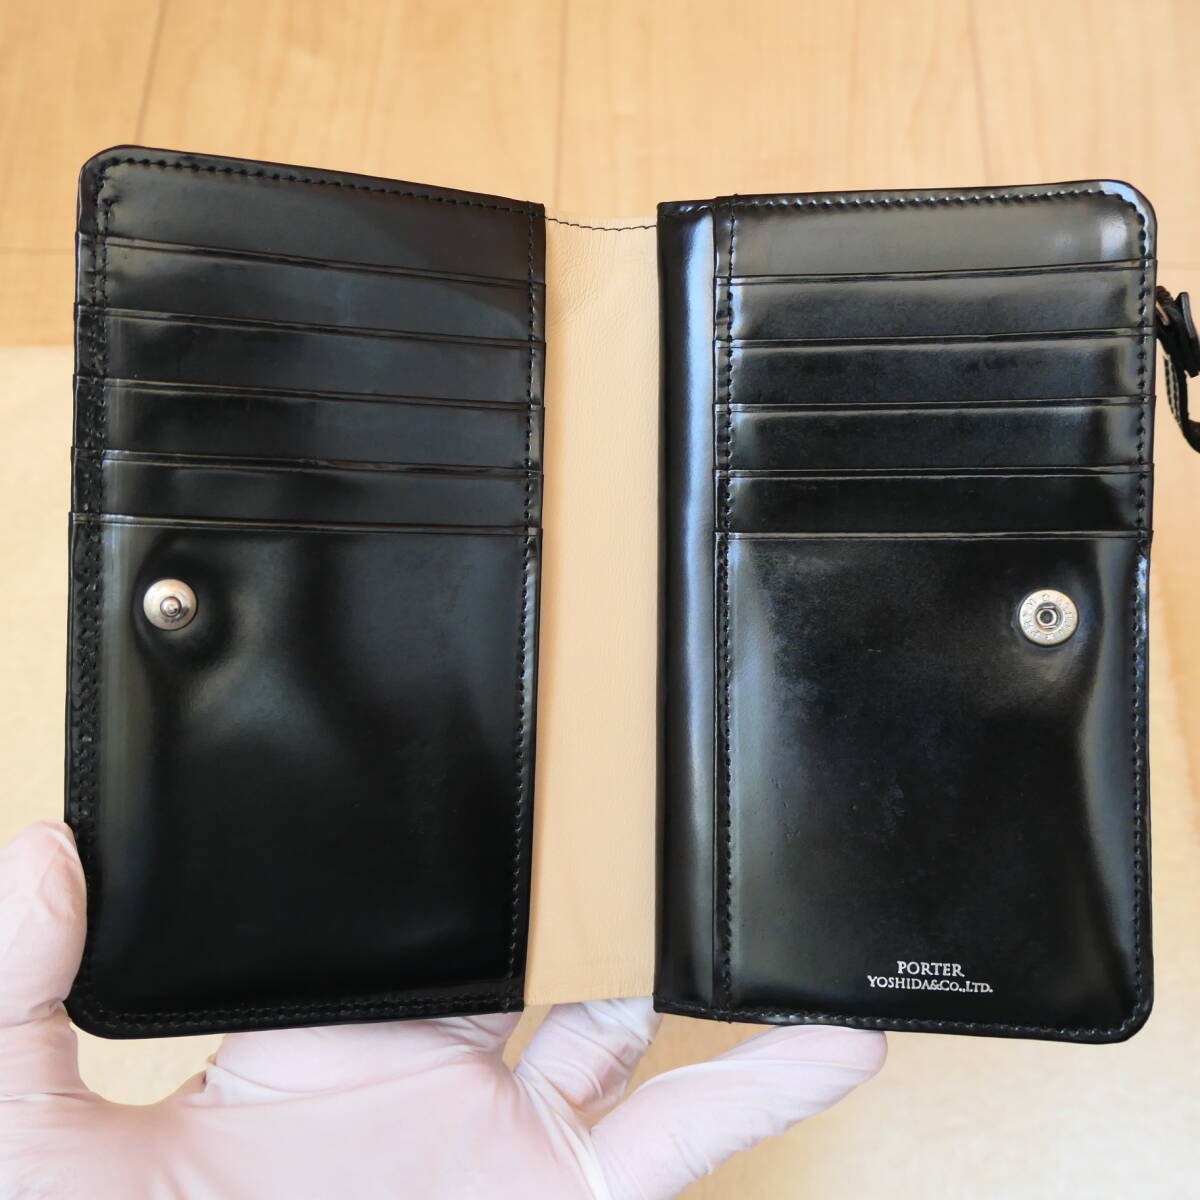  Porter counter folding twice purse wallet black 037-02979 PORTER COUNTER